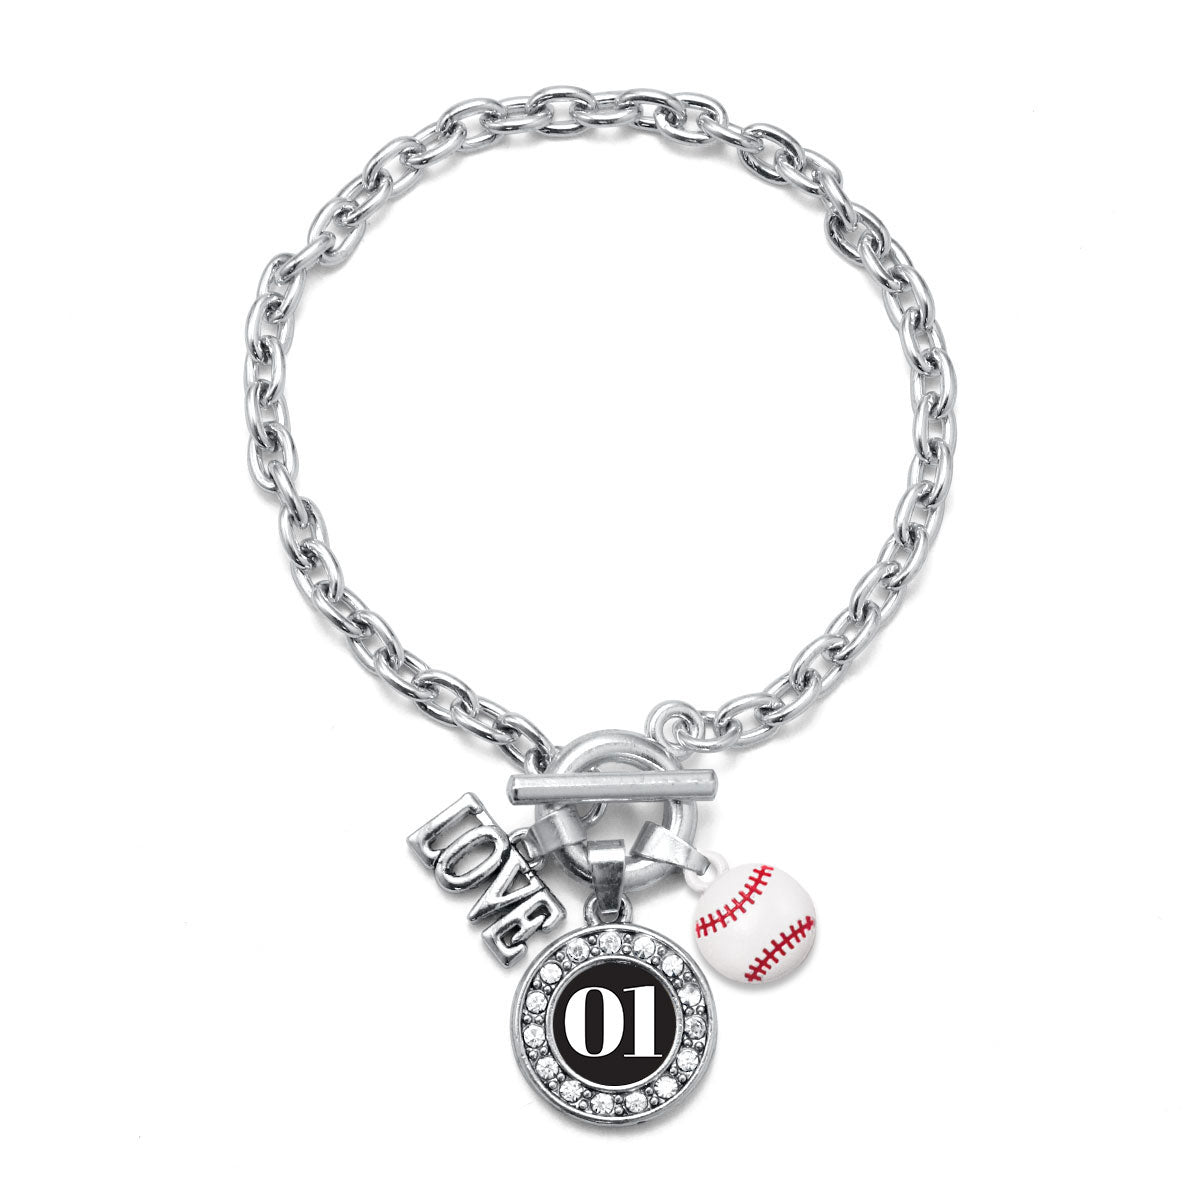 Silver Baseball - Sports Number 01 Circle Charm Toggle Bracelet